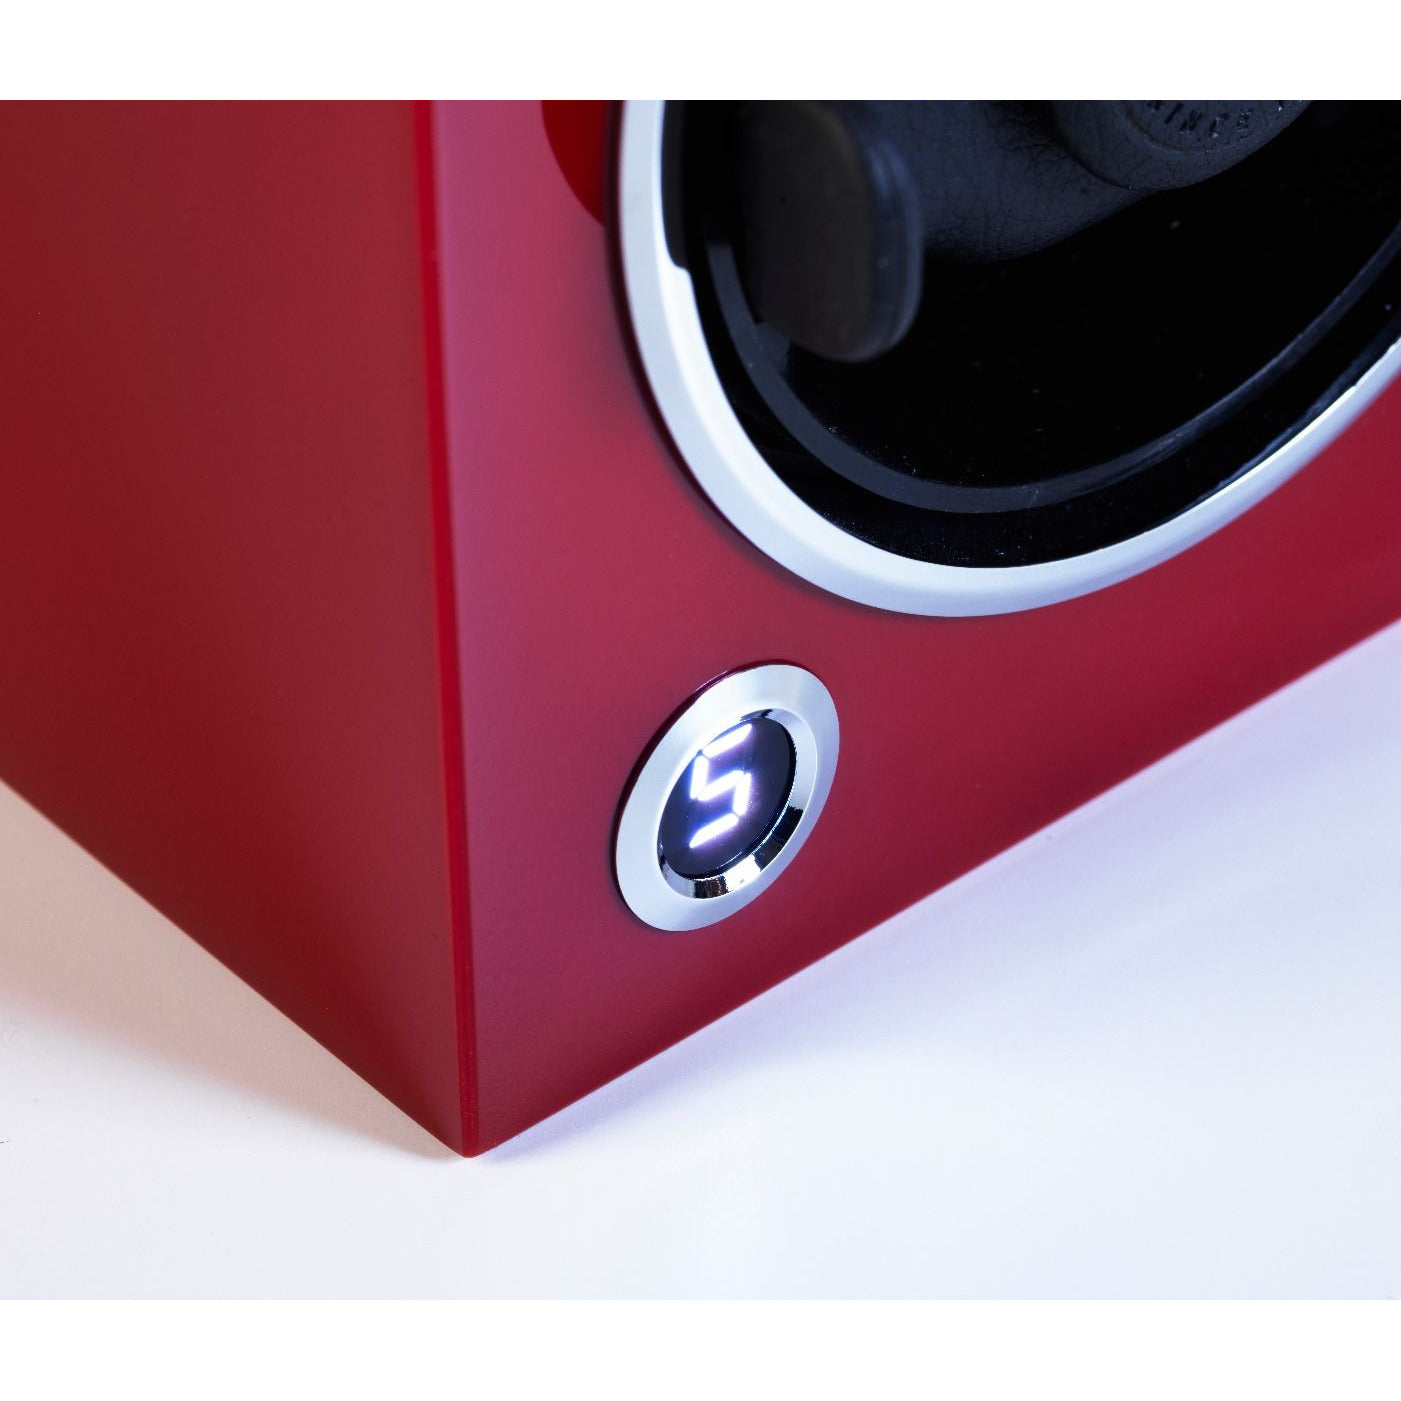 Rapport Evolution Cube Watch Winder Single in Red EVO43 - Watchwindersplus